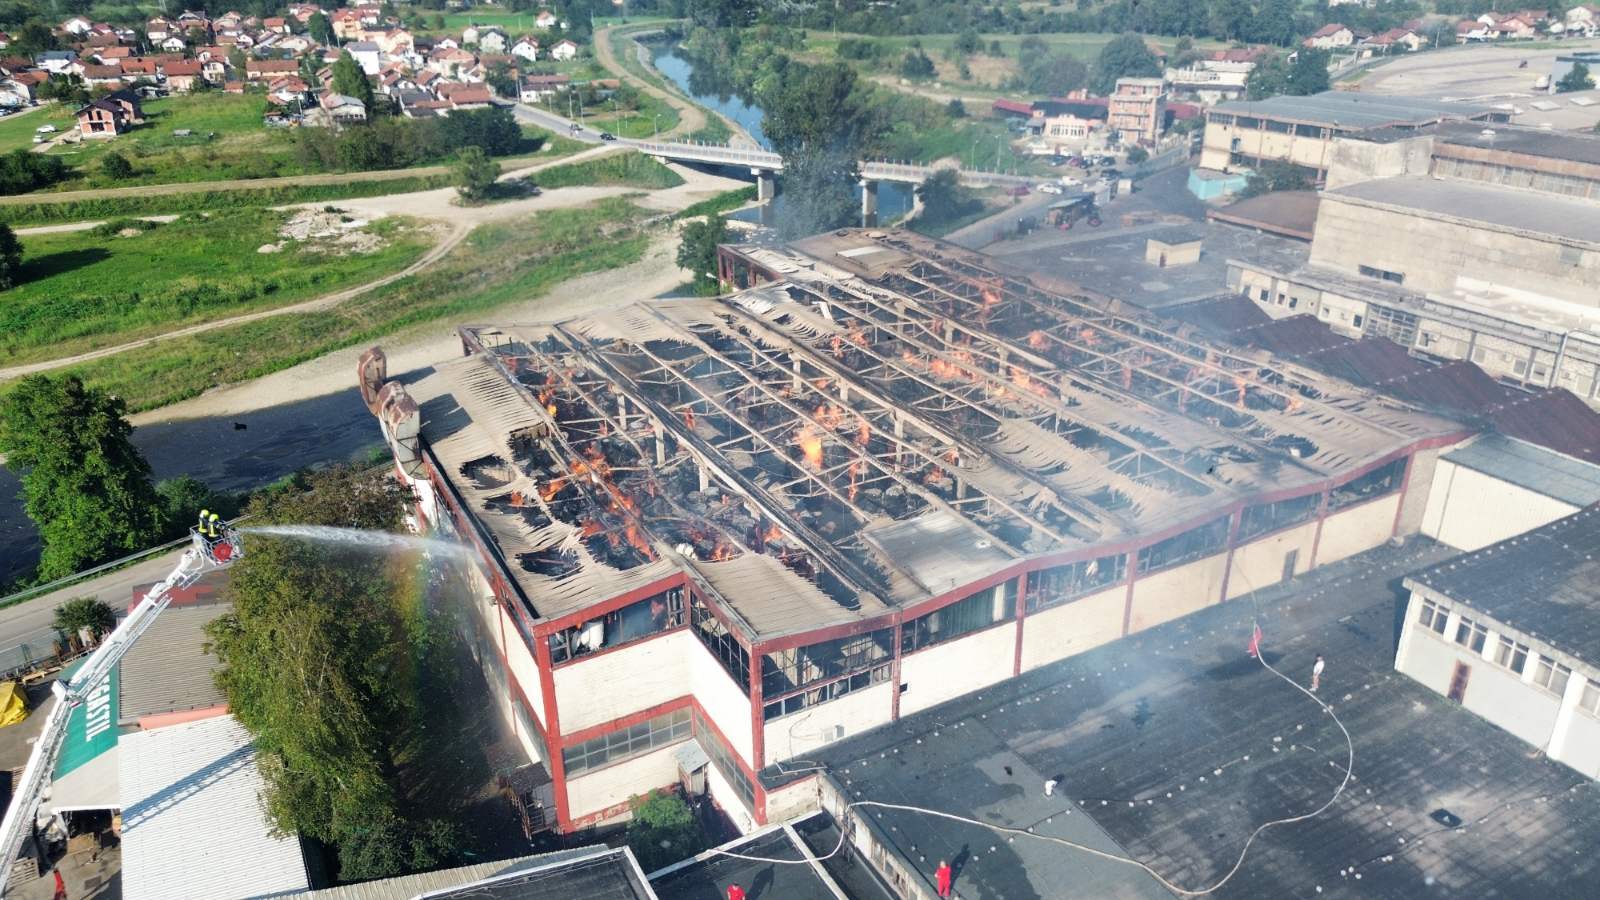 HAOS U BANJALUCI Gori fabrika Celex, vatrogasci nadljuski gase požar (FOTO, VIDEO)